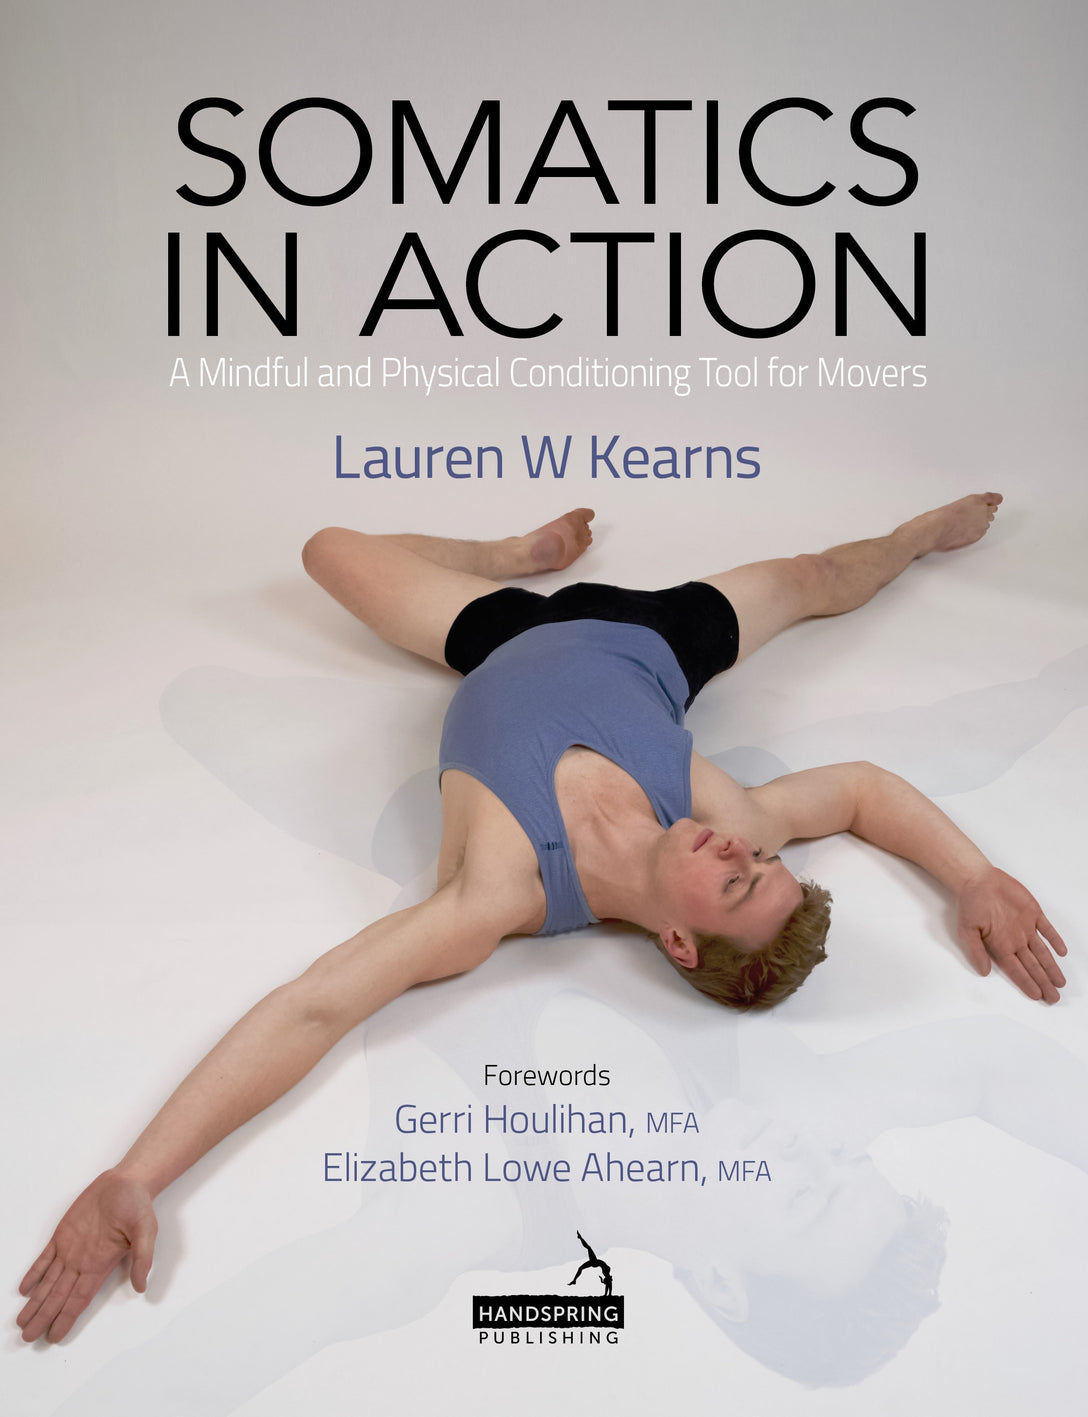 Somatics in Action by Lauren Kearns